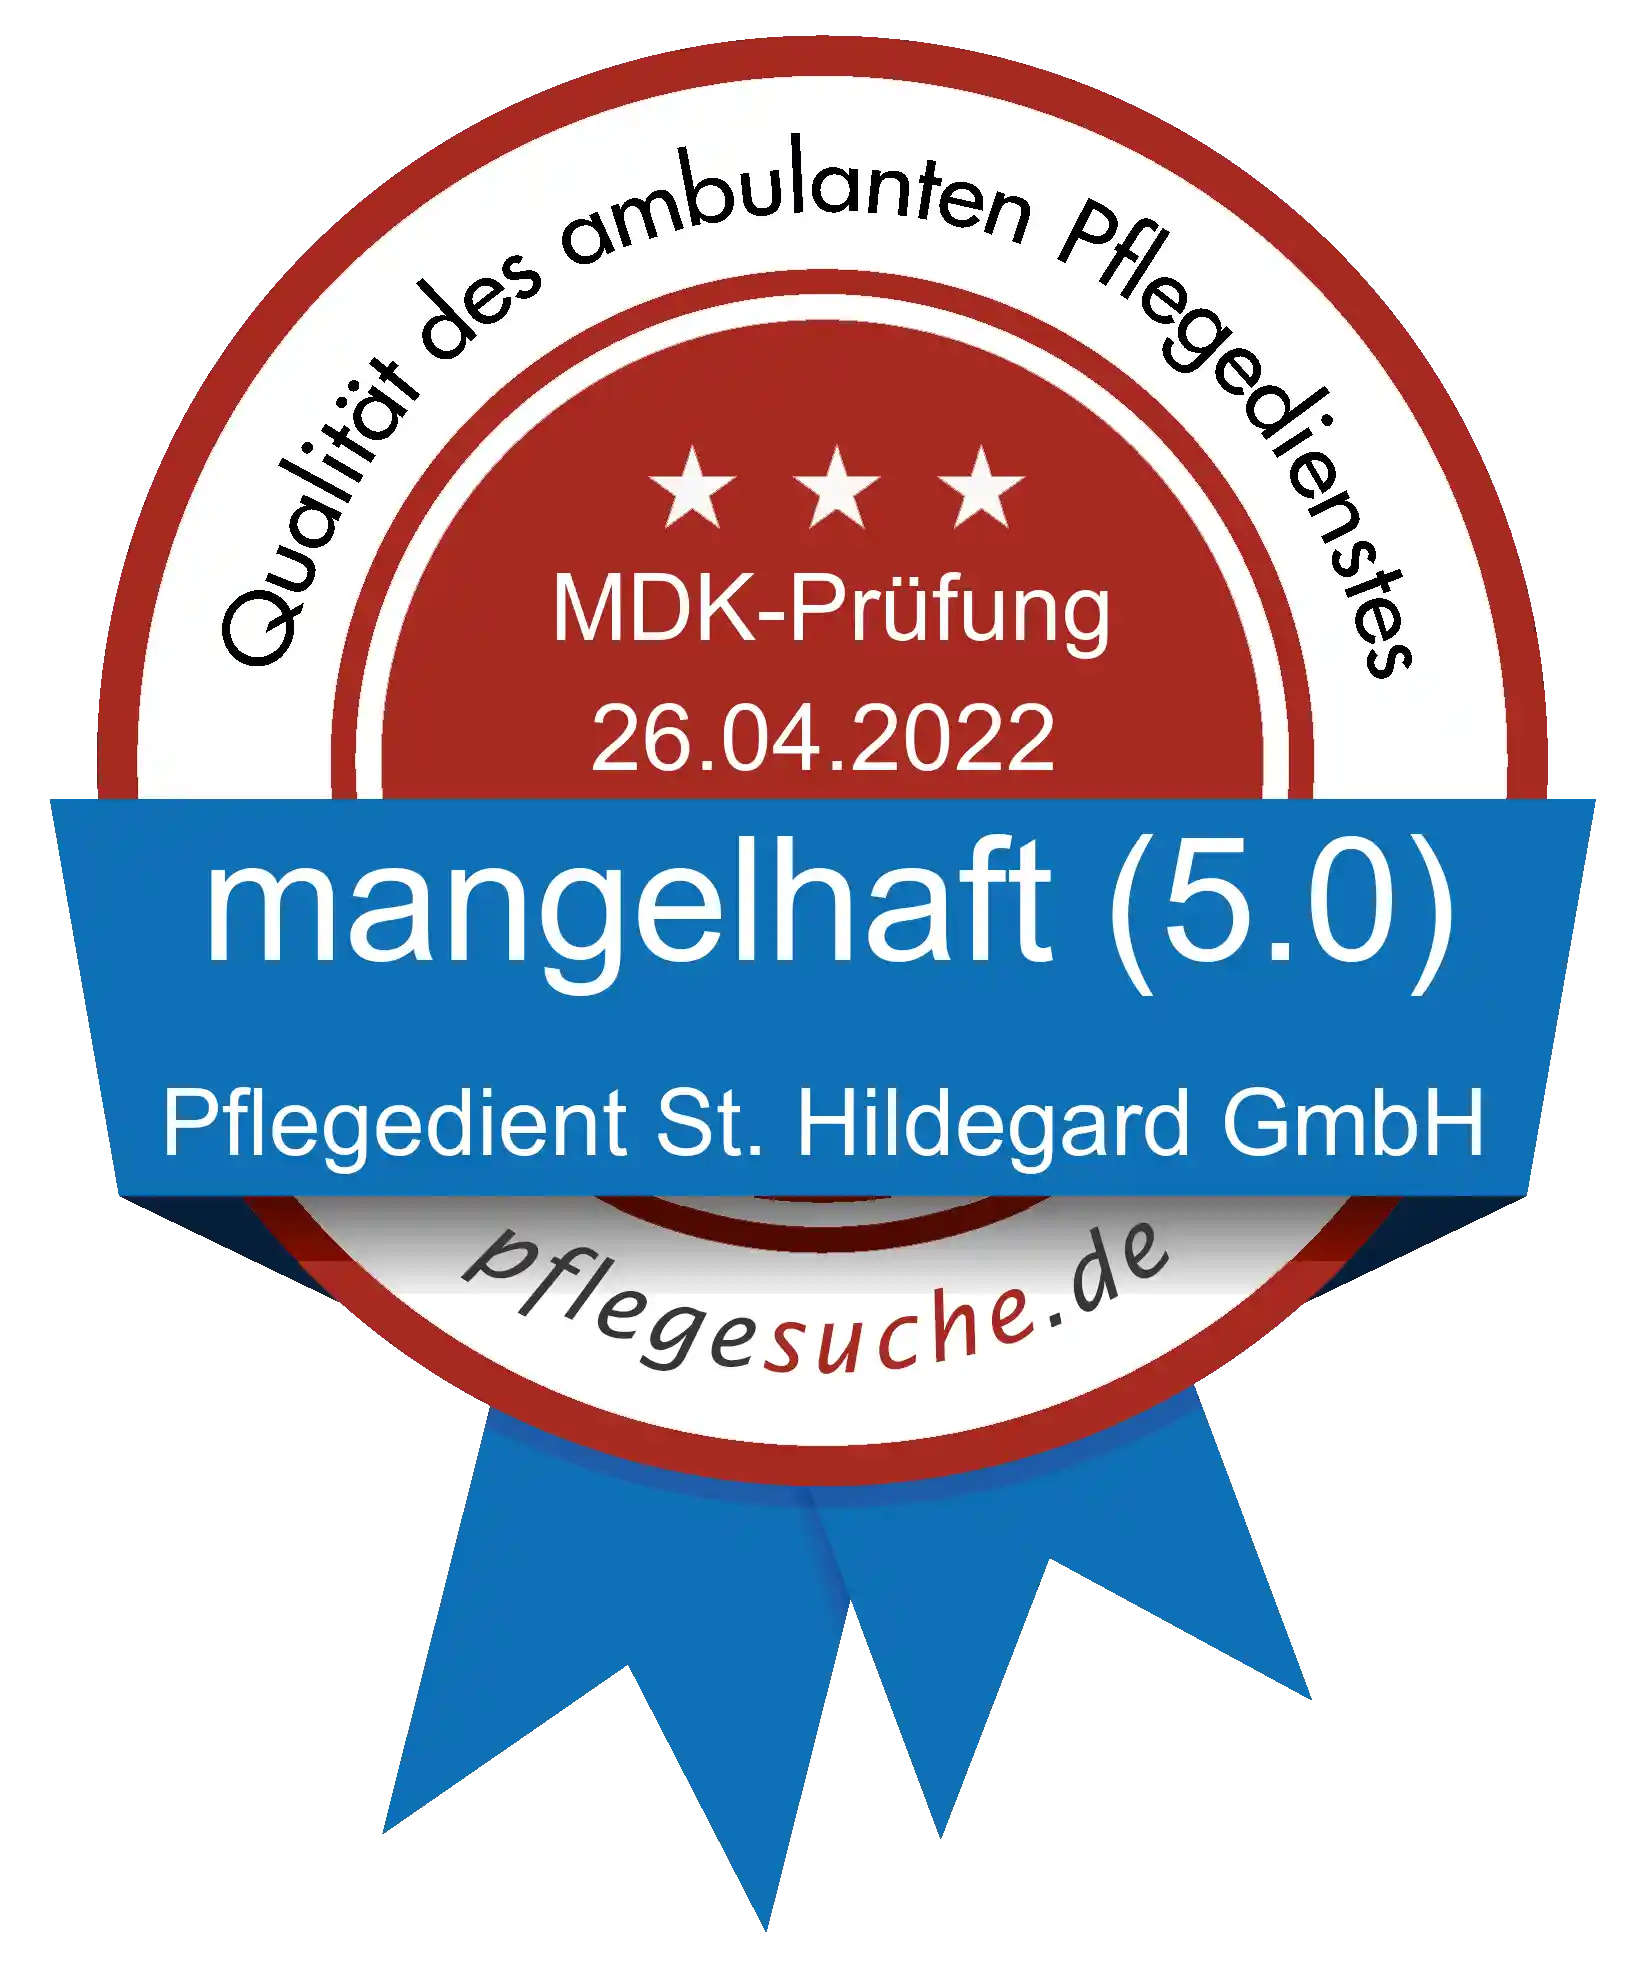 Siegel Benotung: Pflegedient St. Hildegard GmbH